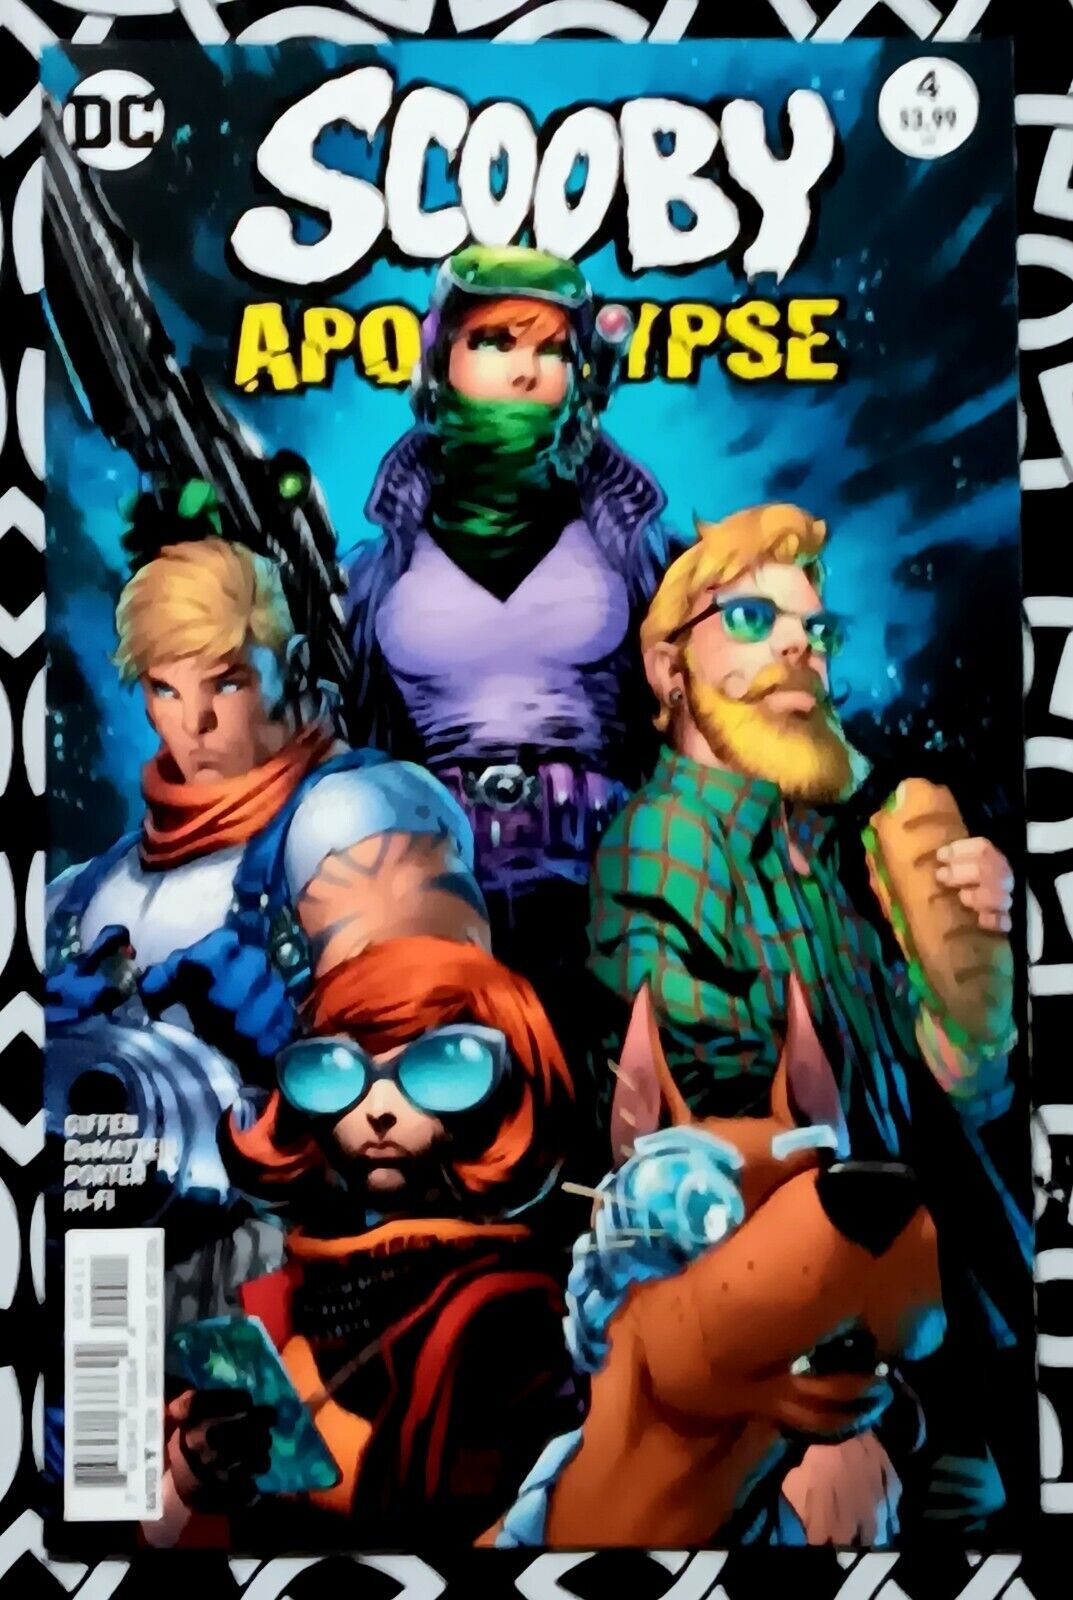 Scooby Apocalypse #4(A) - VF - 2016 - DC Comics - 1st Printing 🔥 